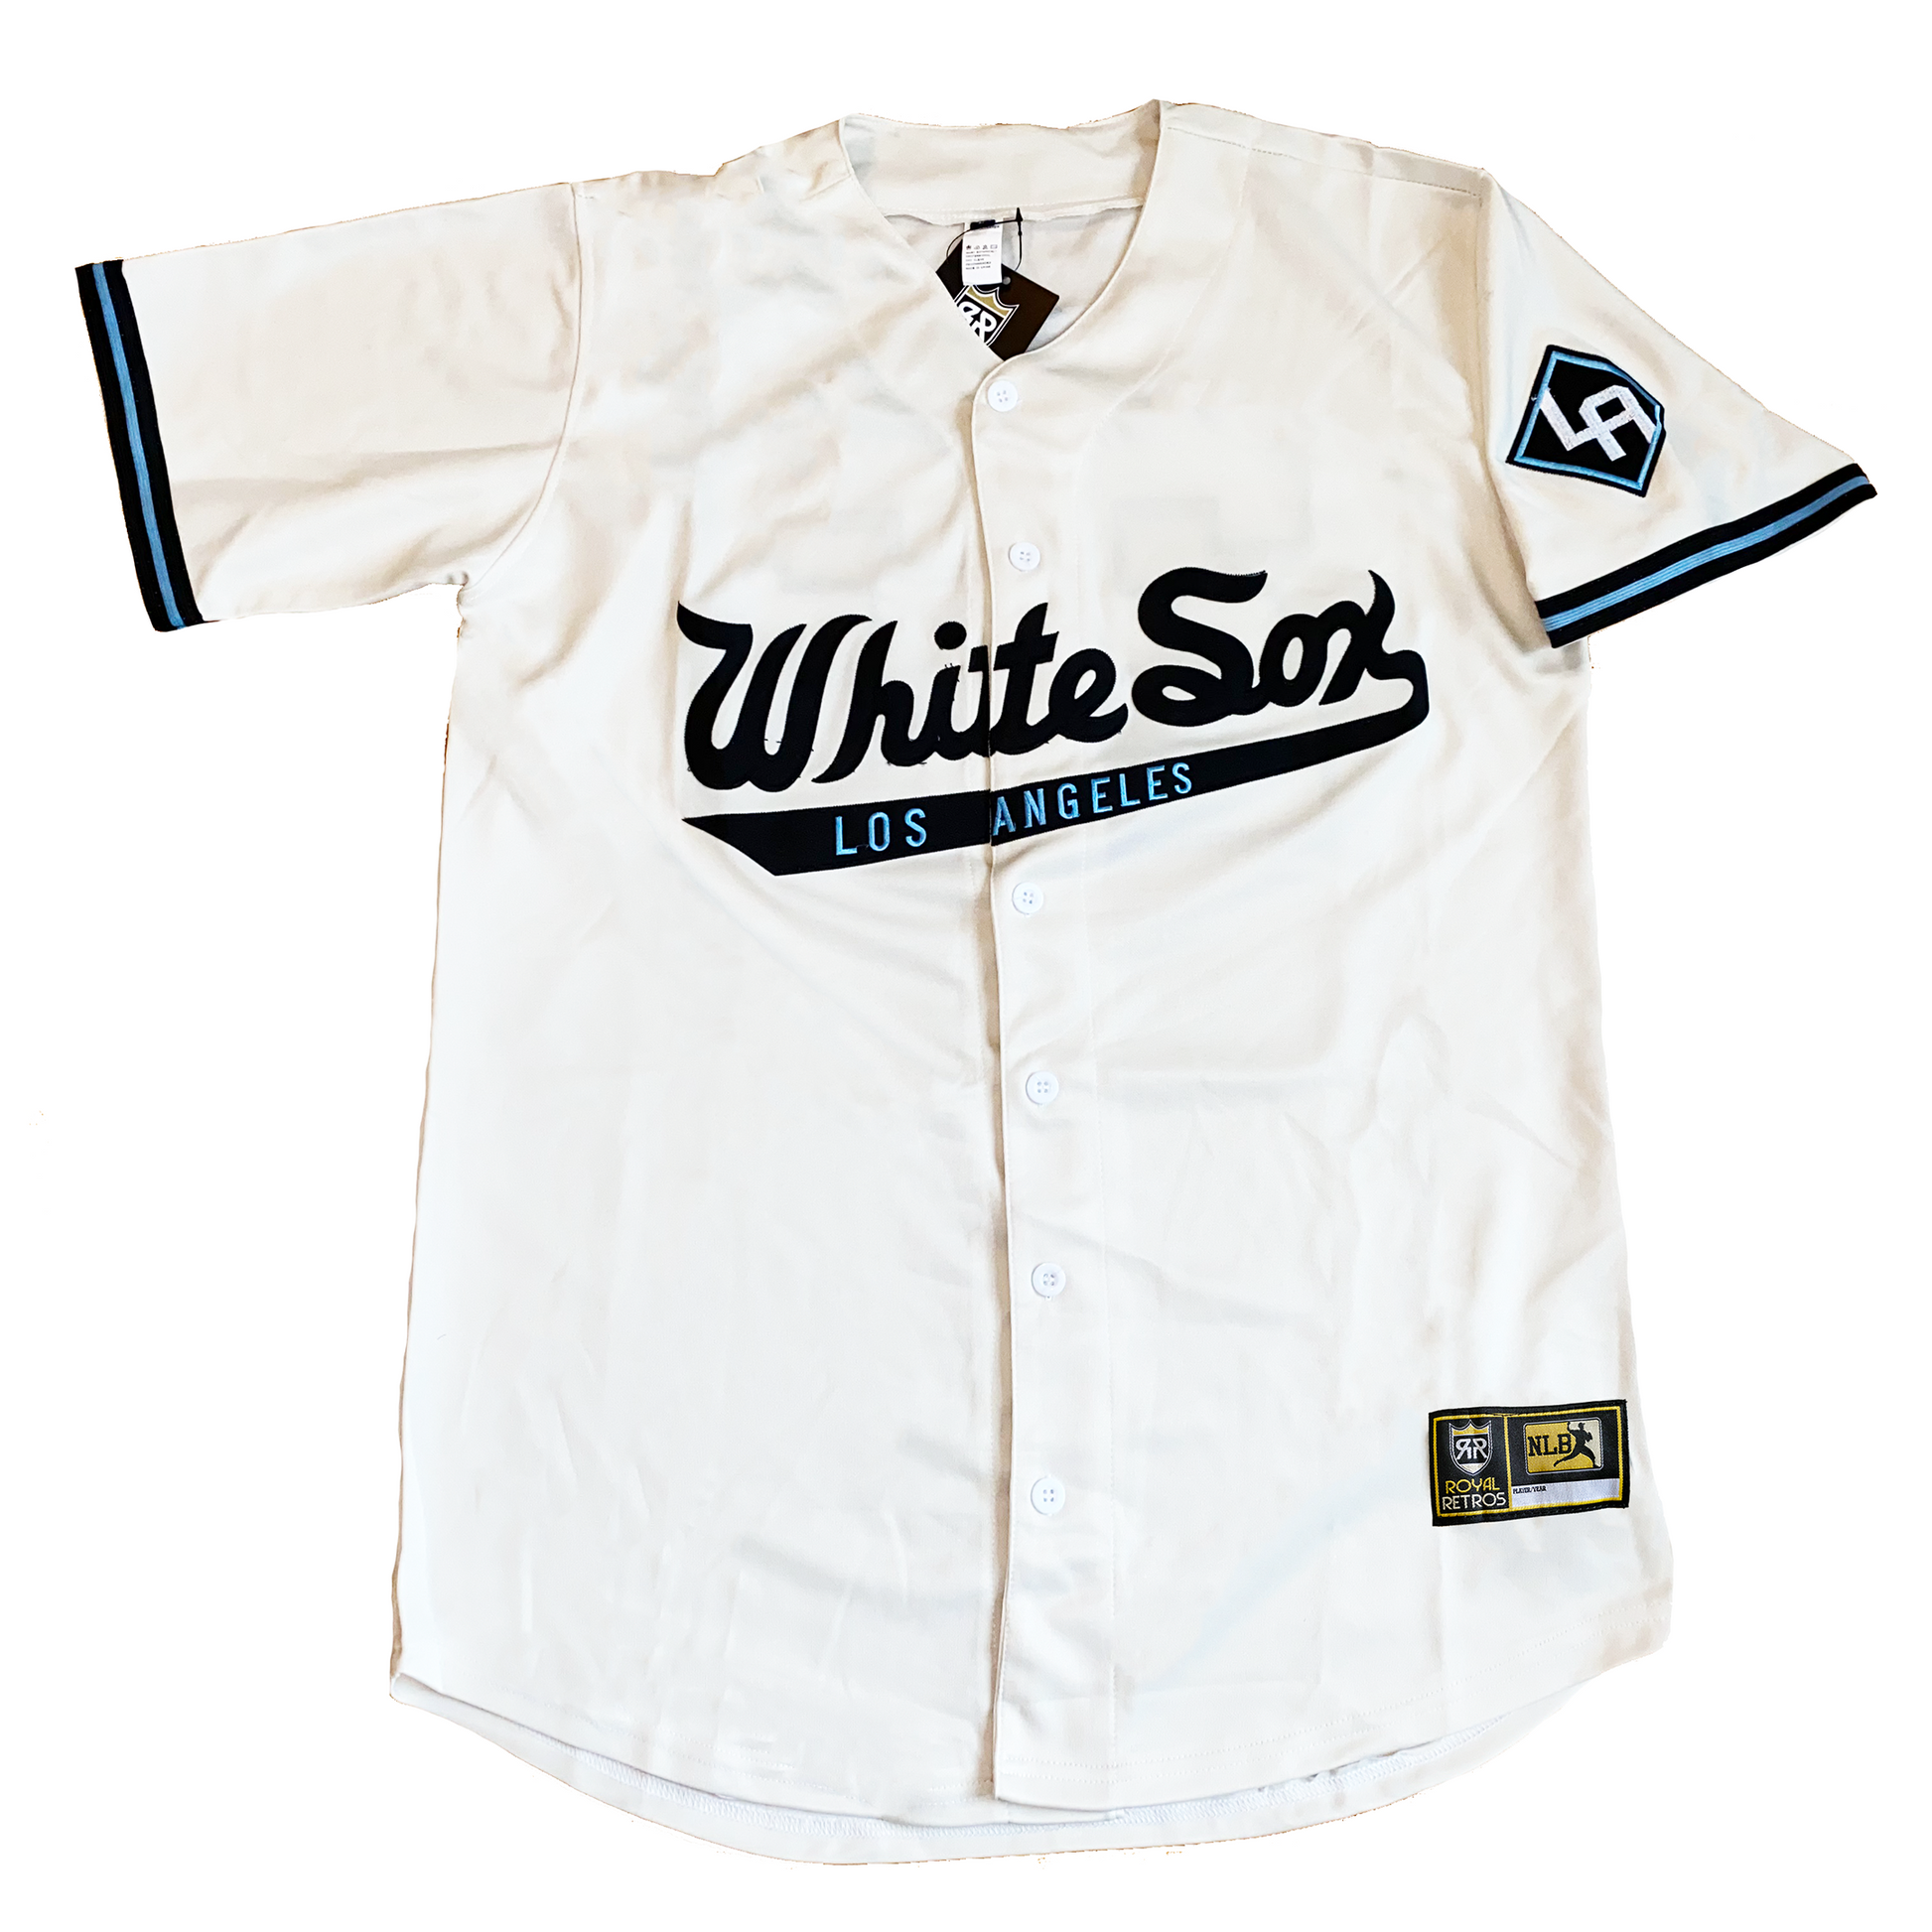 new white sox uniforms